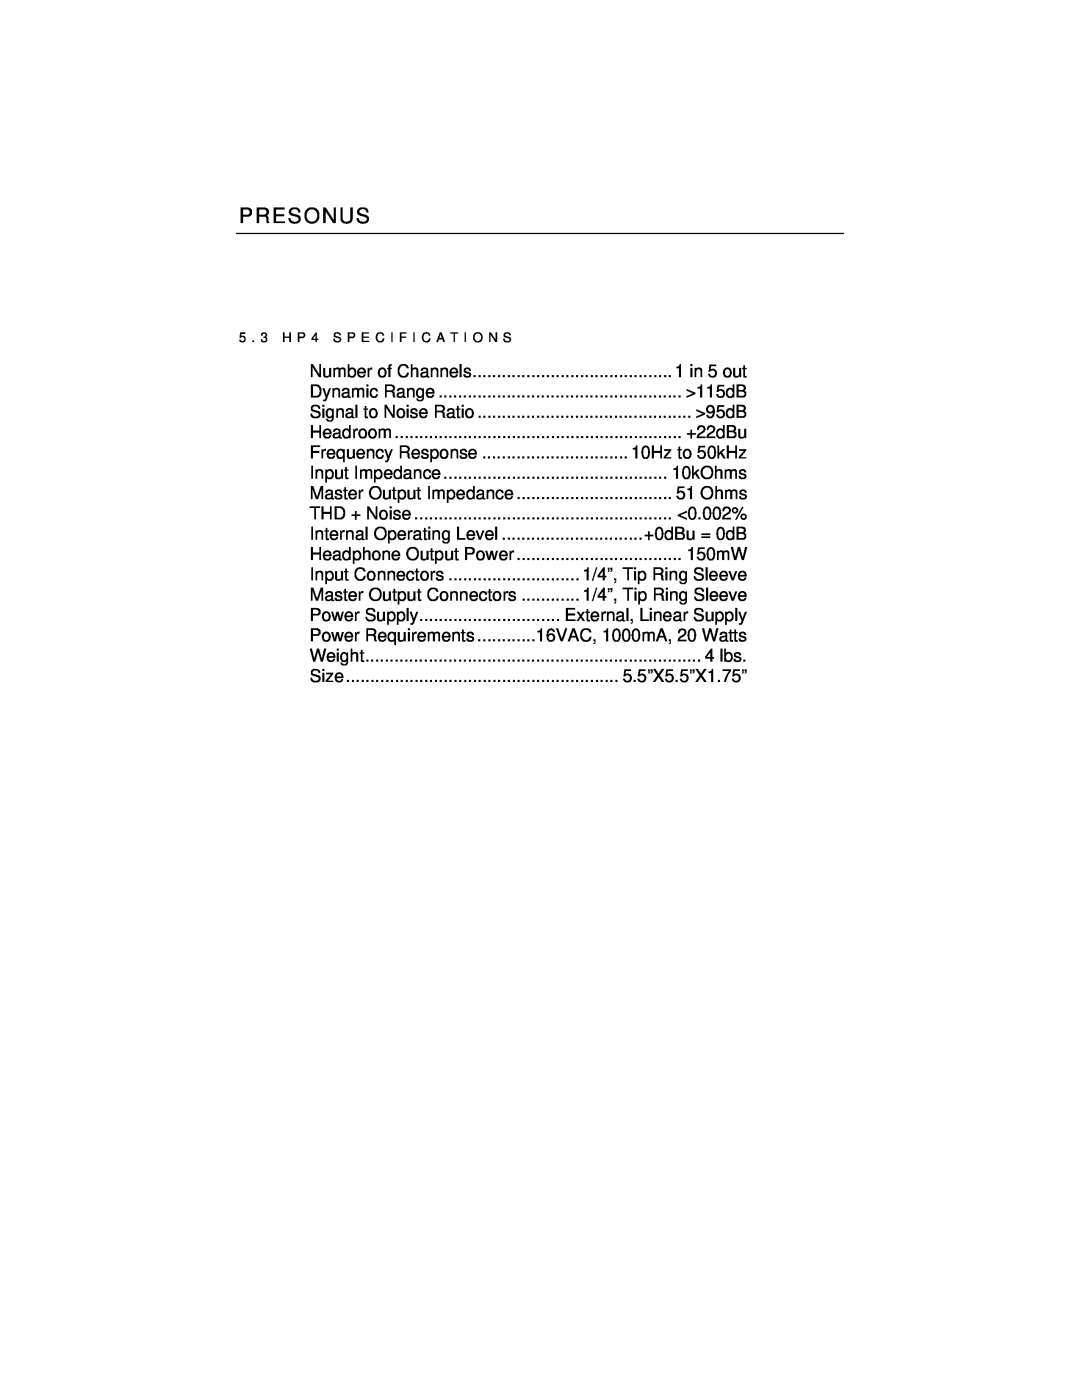 Presonus Audio electronic COMP16, EQ3B, HP4 user manual 1 in 5 out 